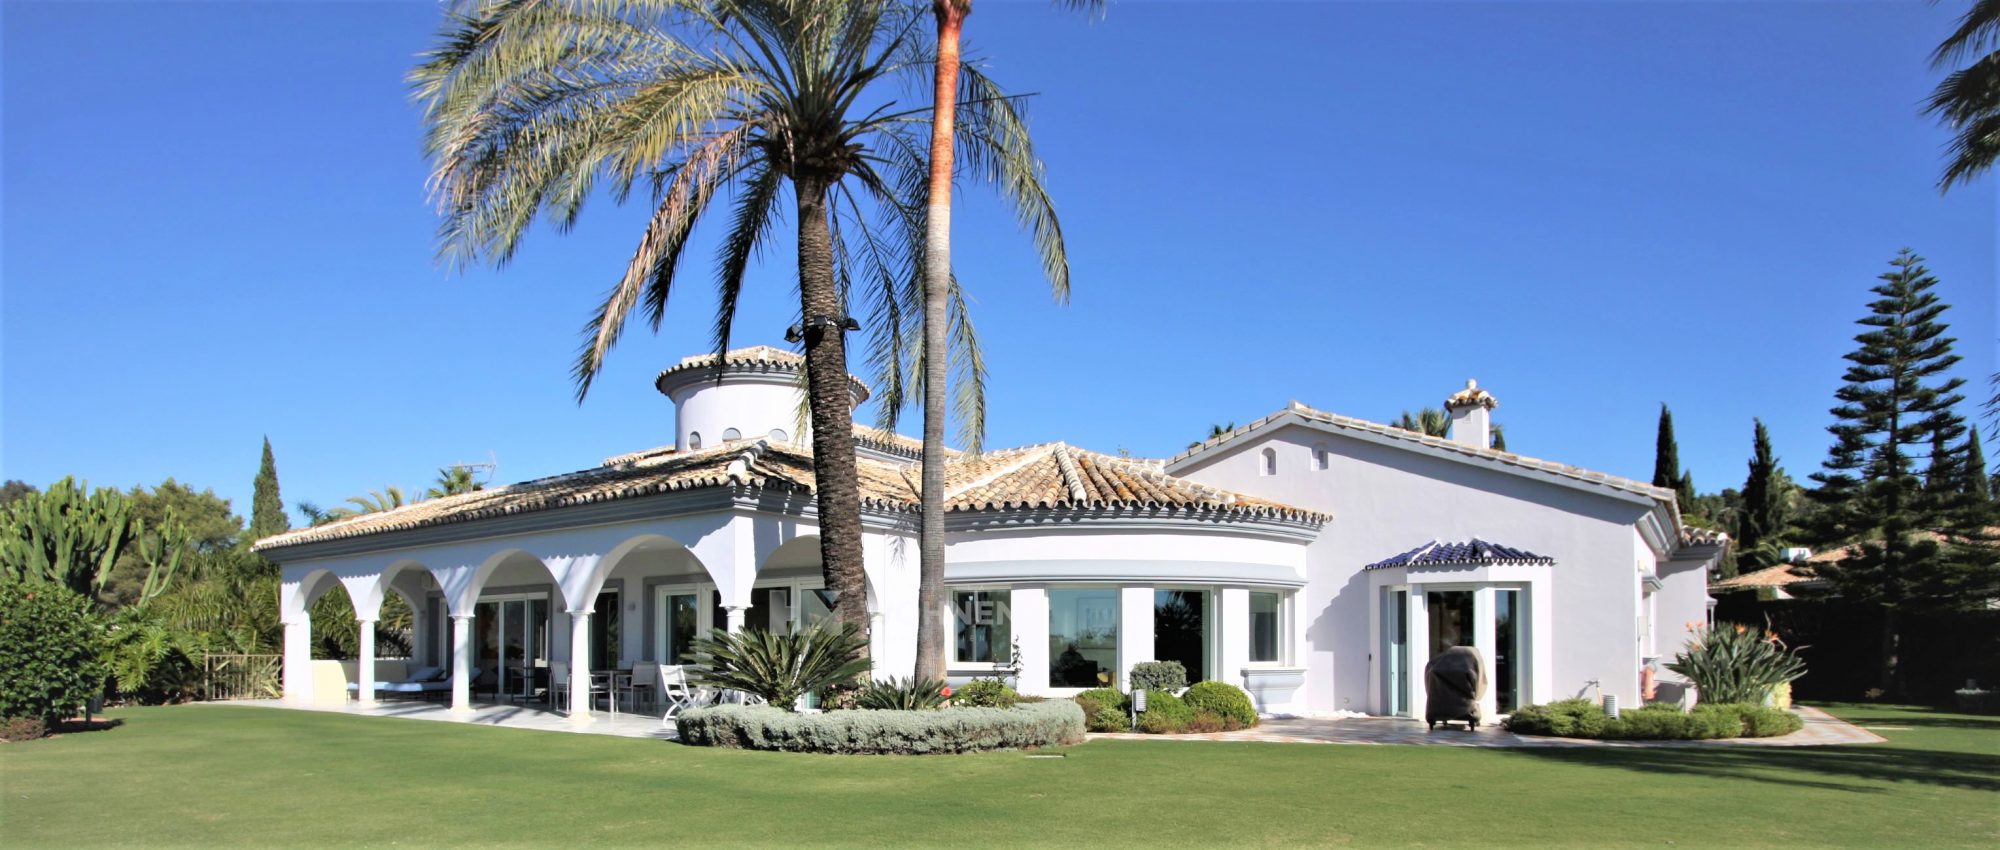 Wonderful modern villa, built in traditional Andalusian style in Hacienda Las Chapas Marbella